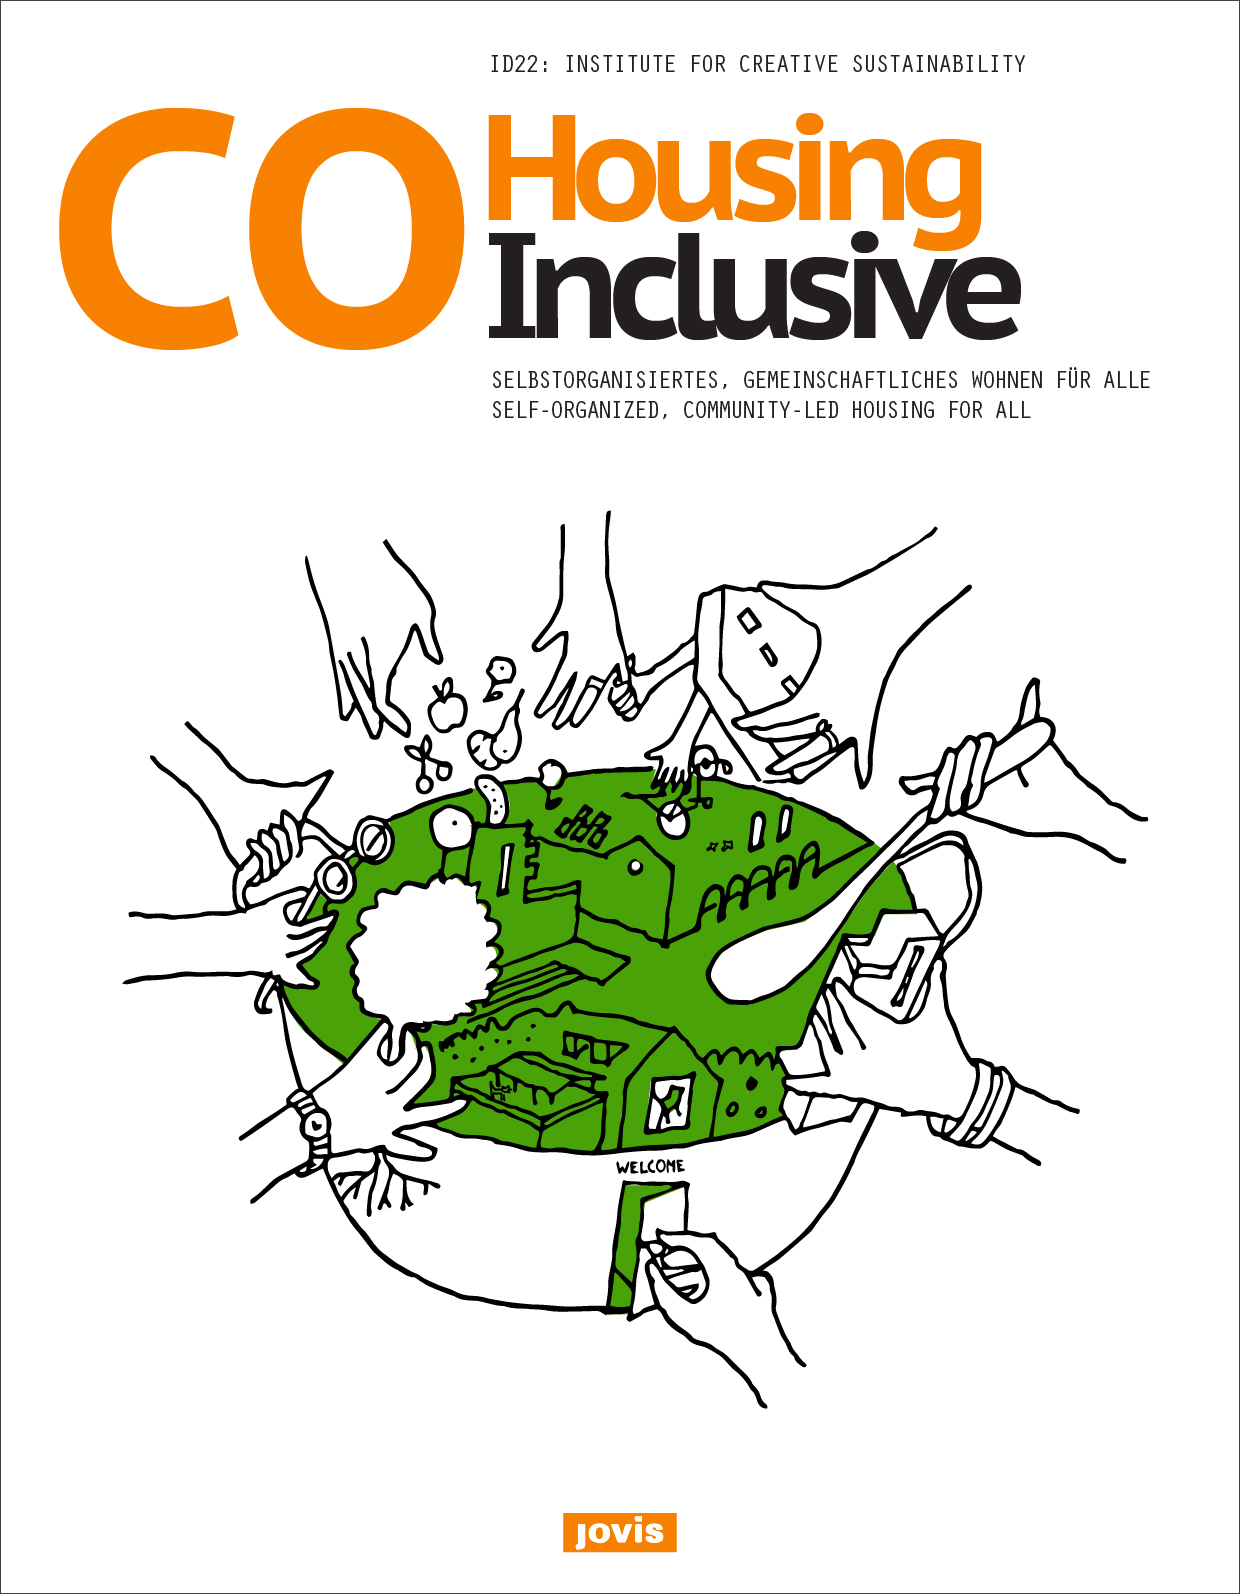 Cover cohousing inclusive